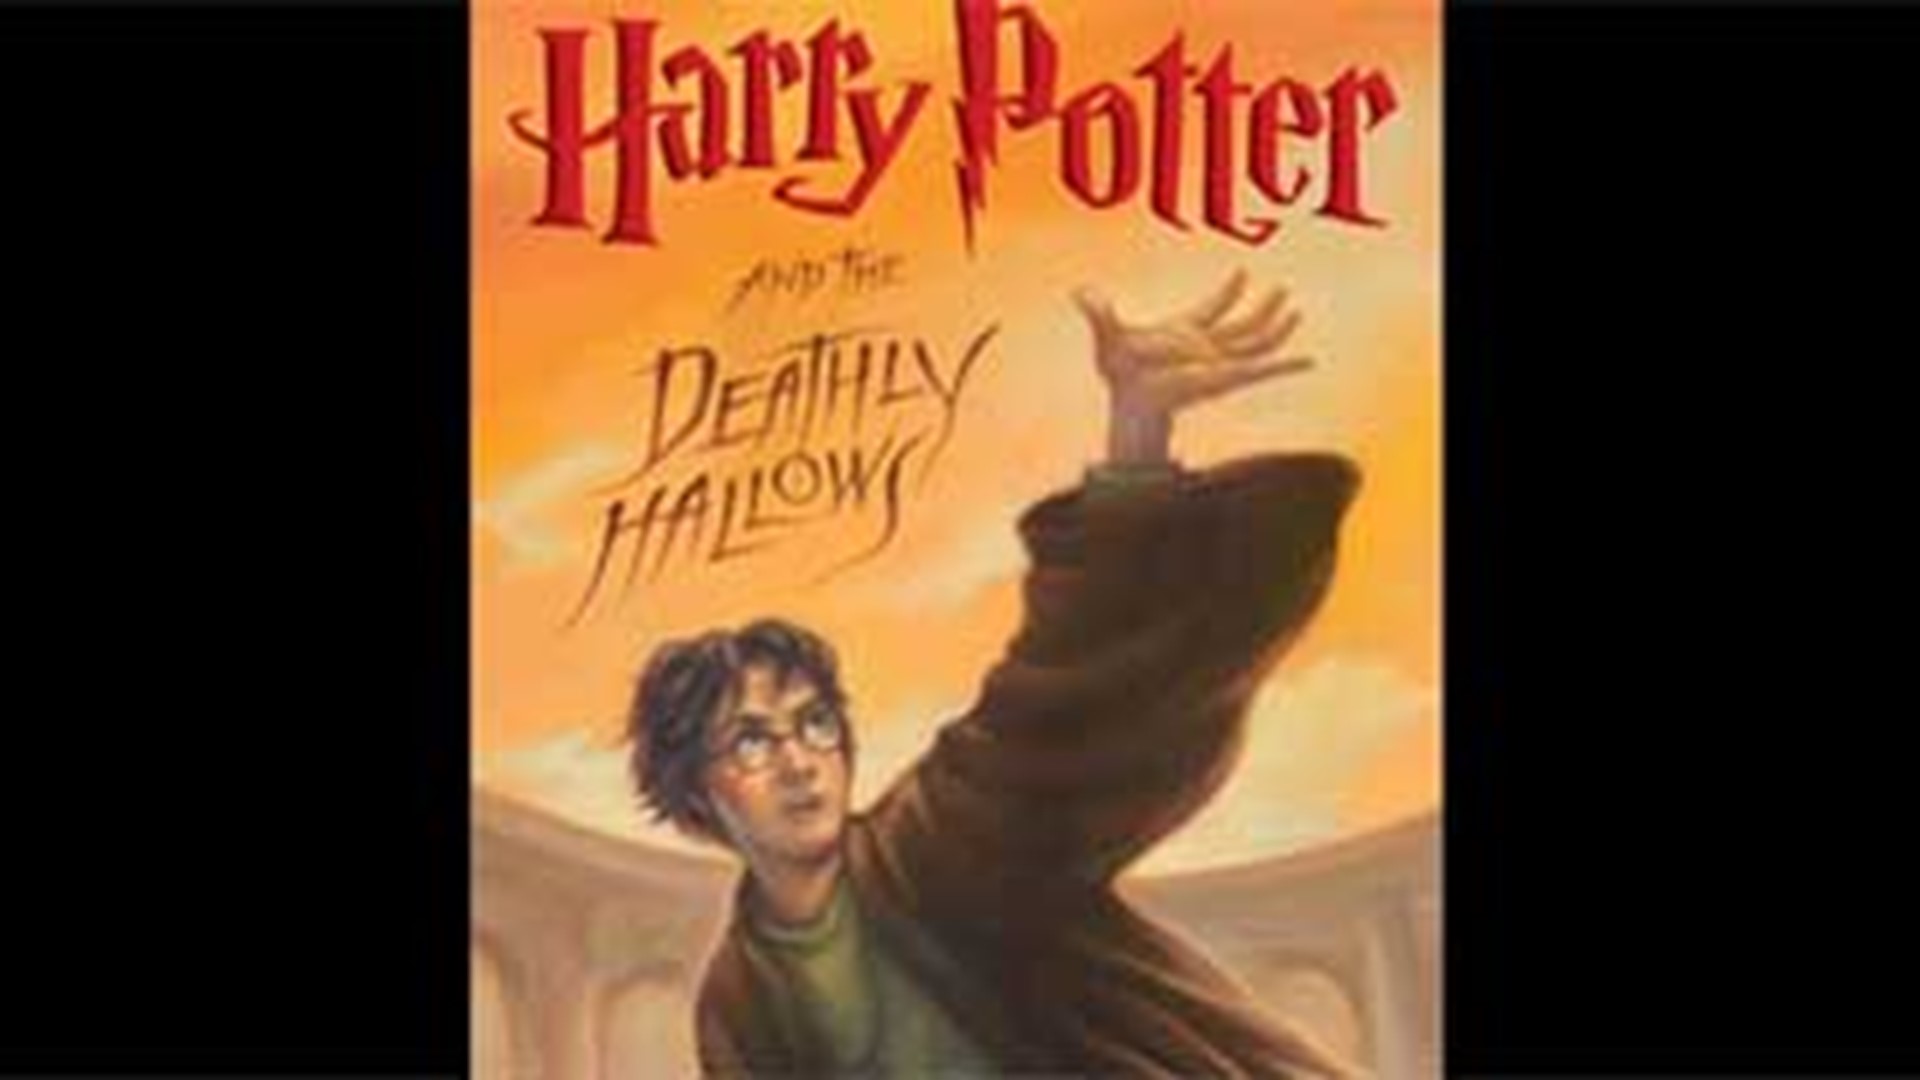 63 Best Seller Awards Harry Potter Books Have Won for Learn